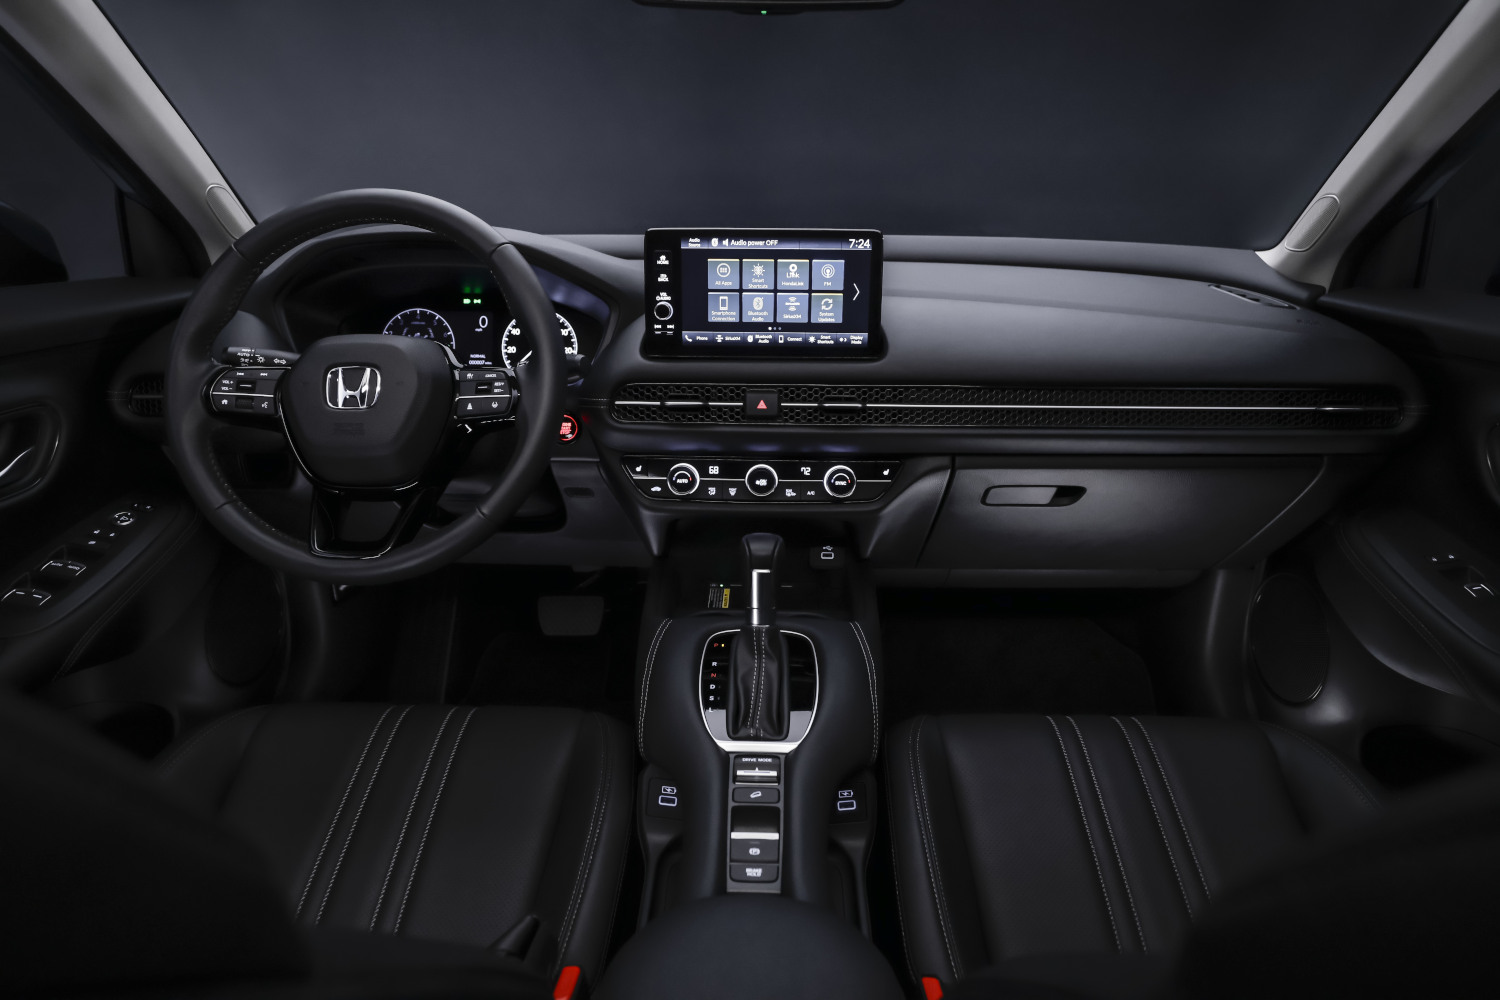 Inside the Honda SUV